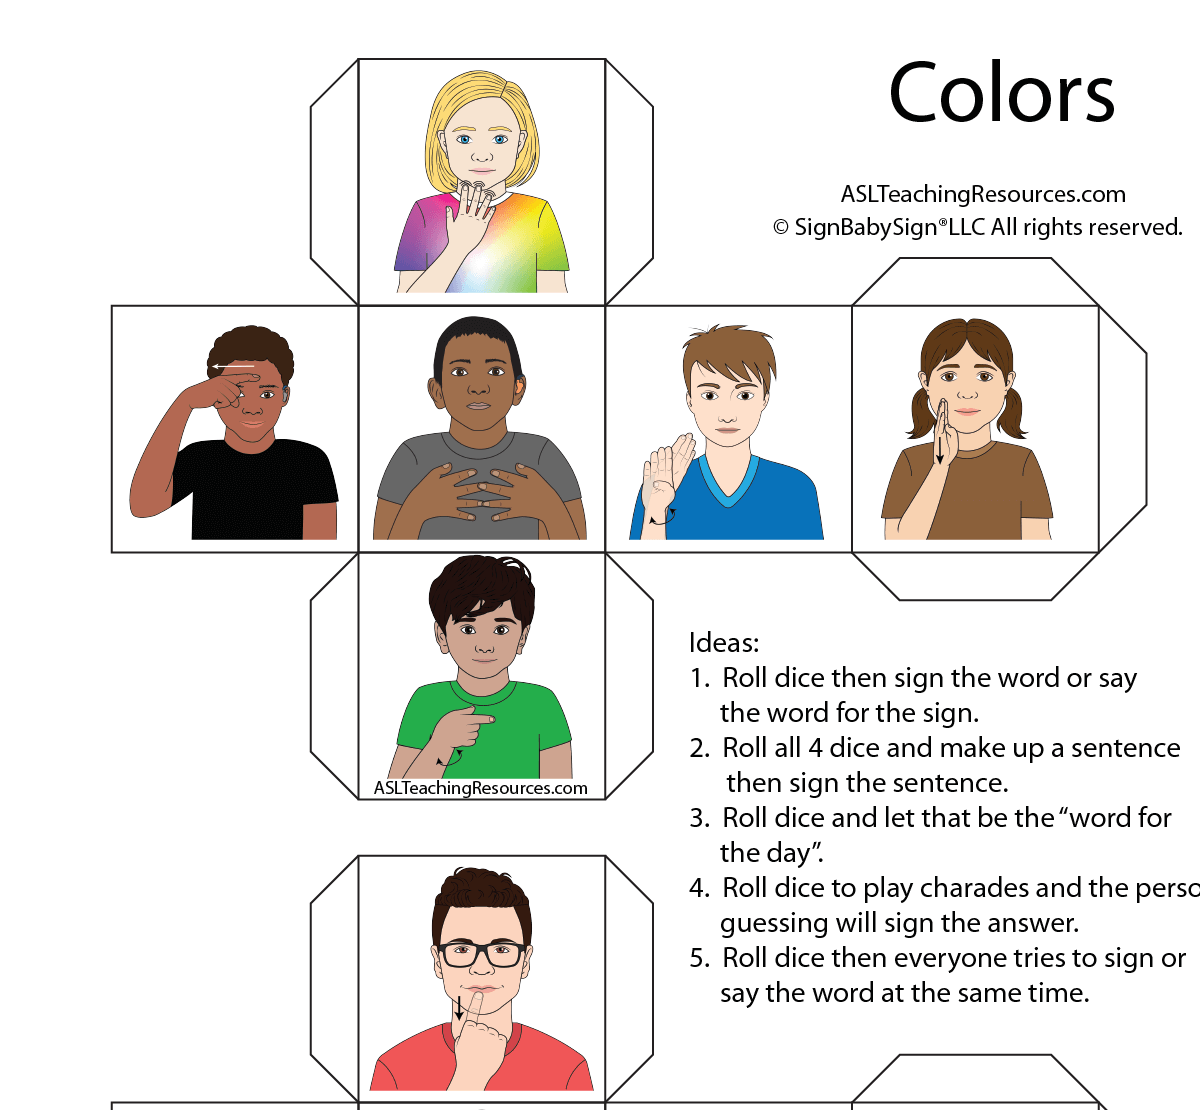 asl-sign-language-colors-visual-flashcard-dictionary-sign-language